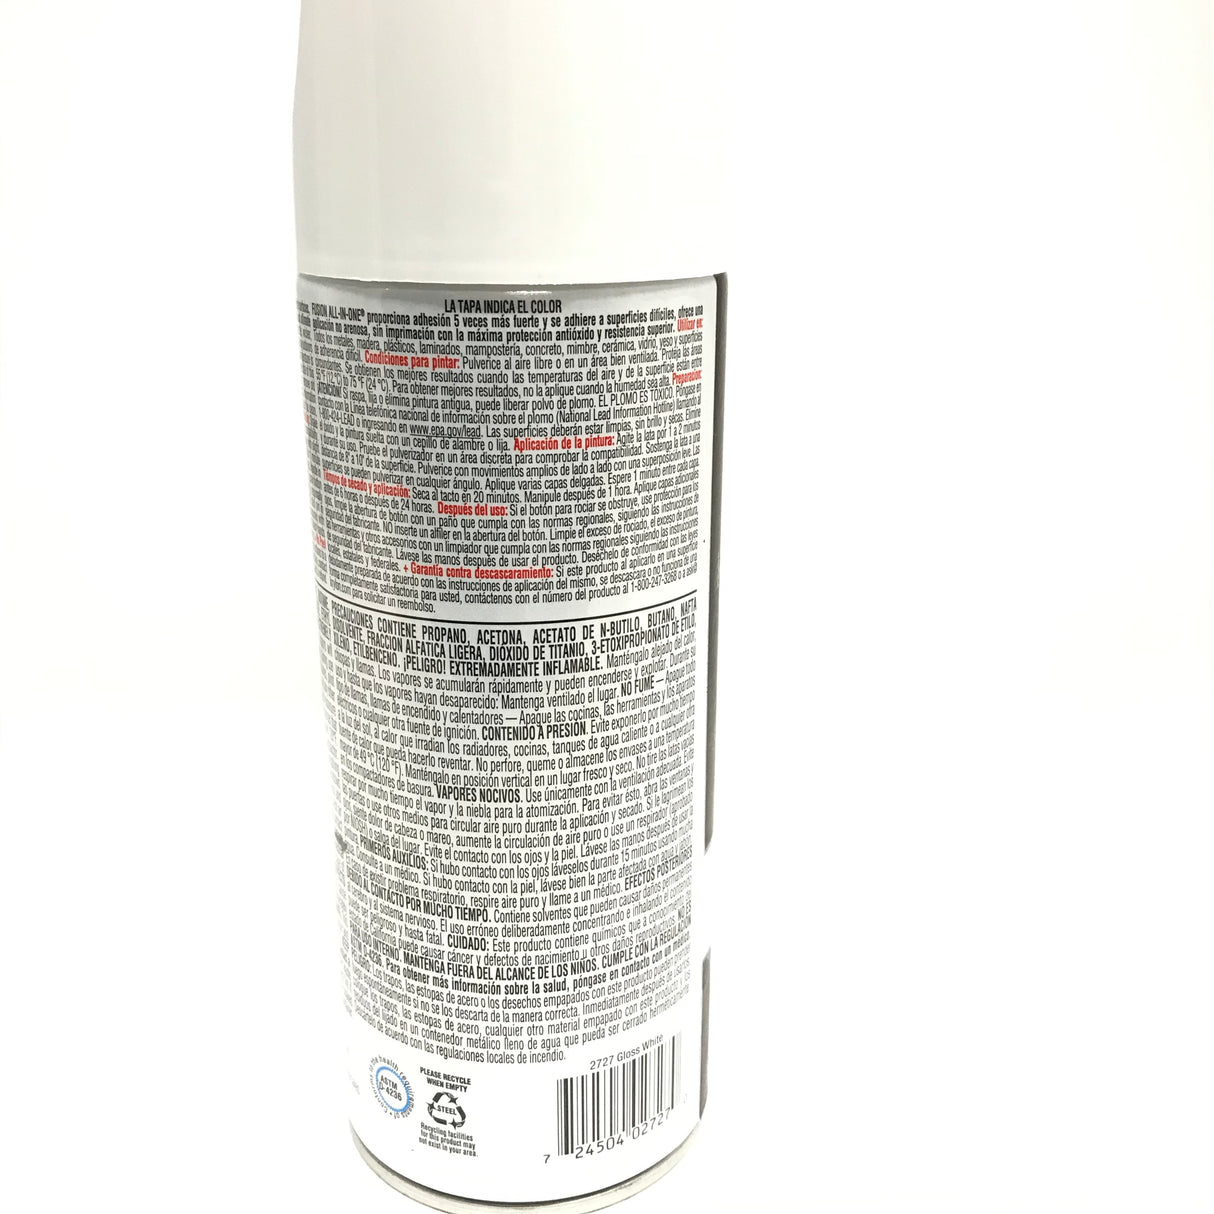 KRYLON 2727-3 PACK Gloss White All-In-One Fusion Paint & Primer - No-Peel - 12 oz Aerosol